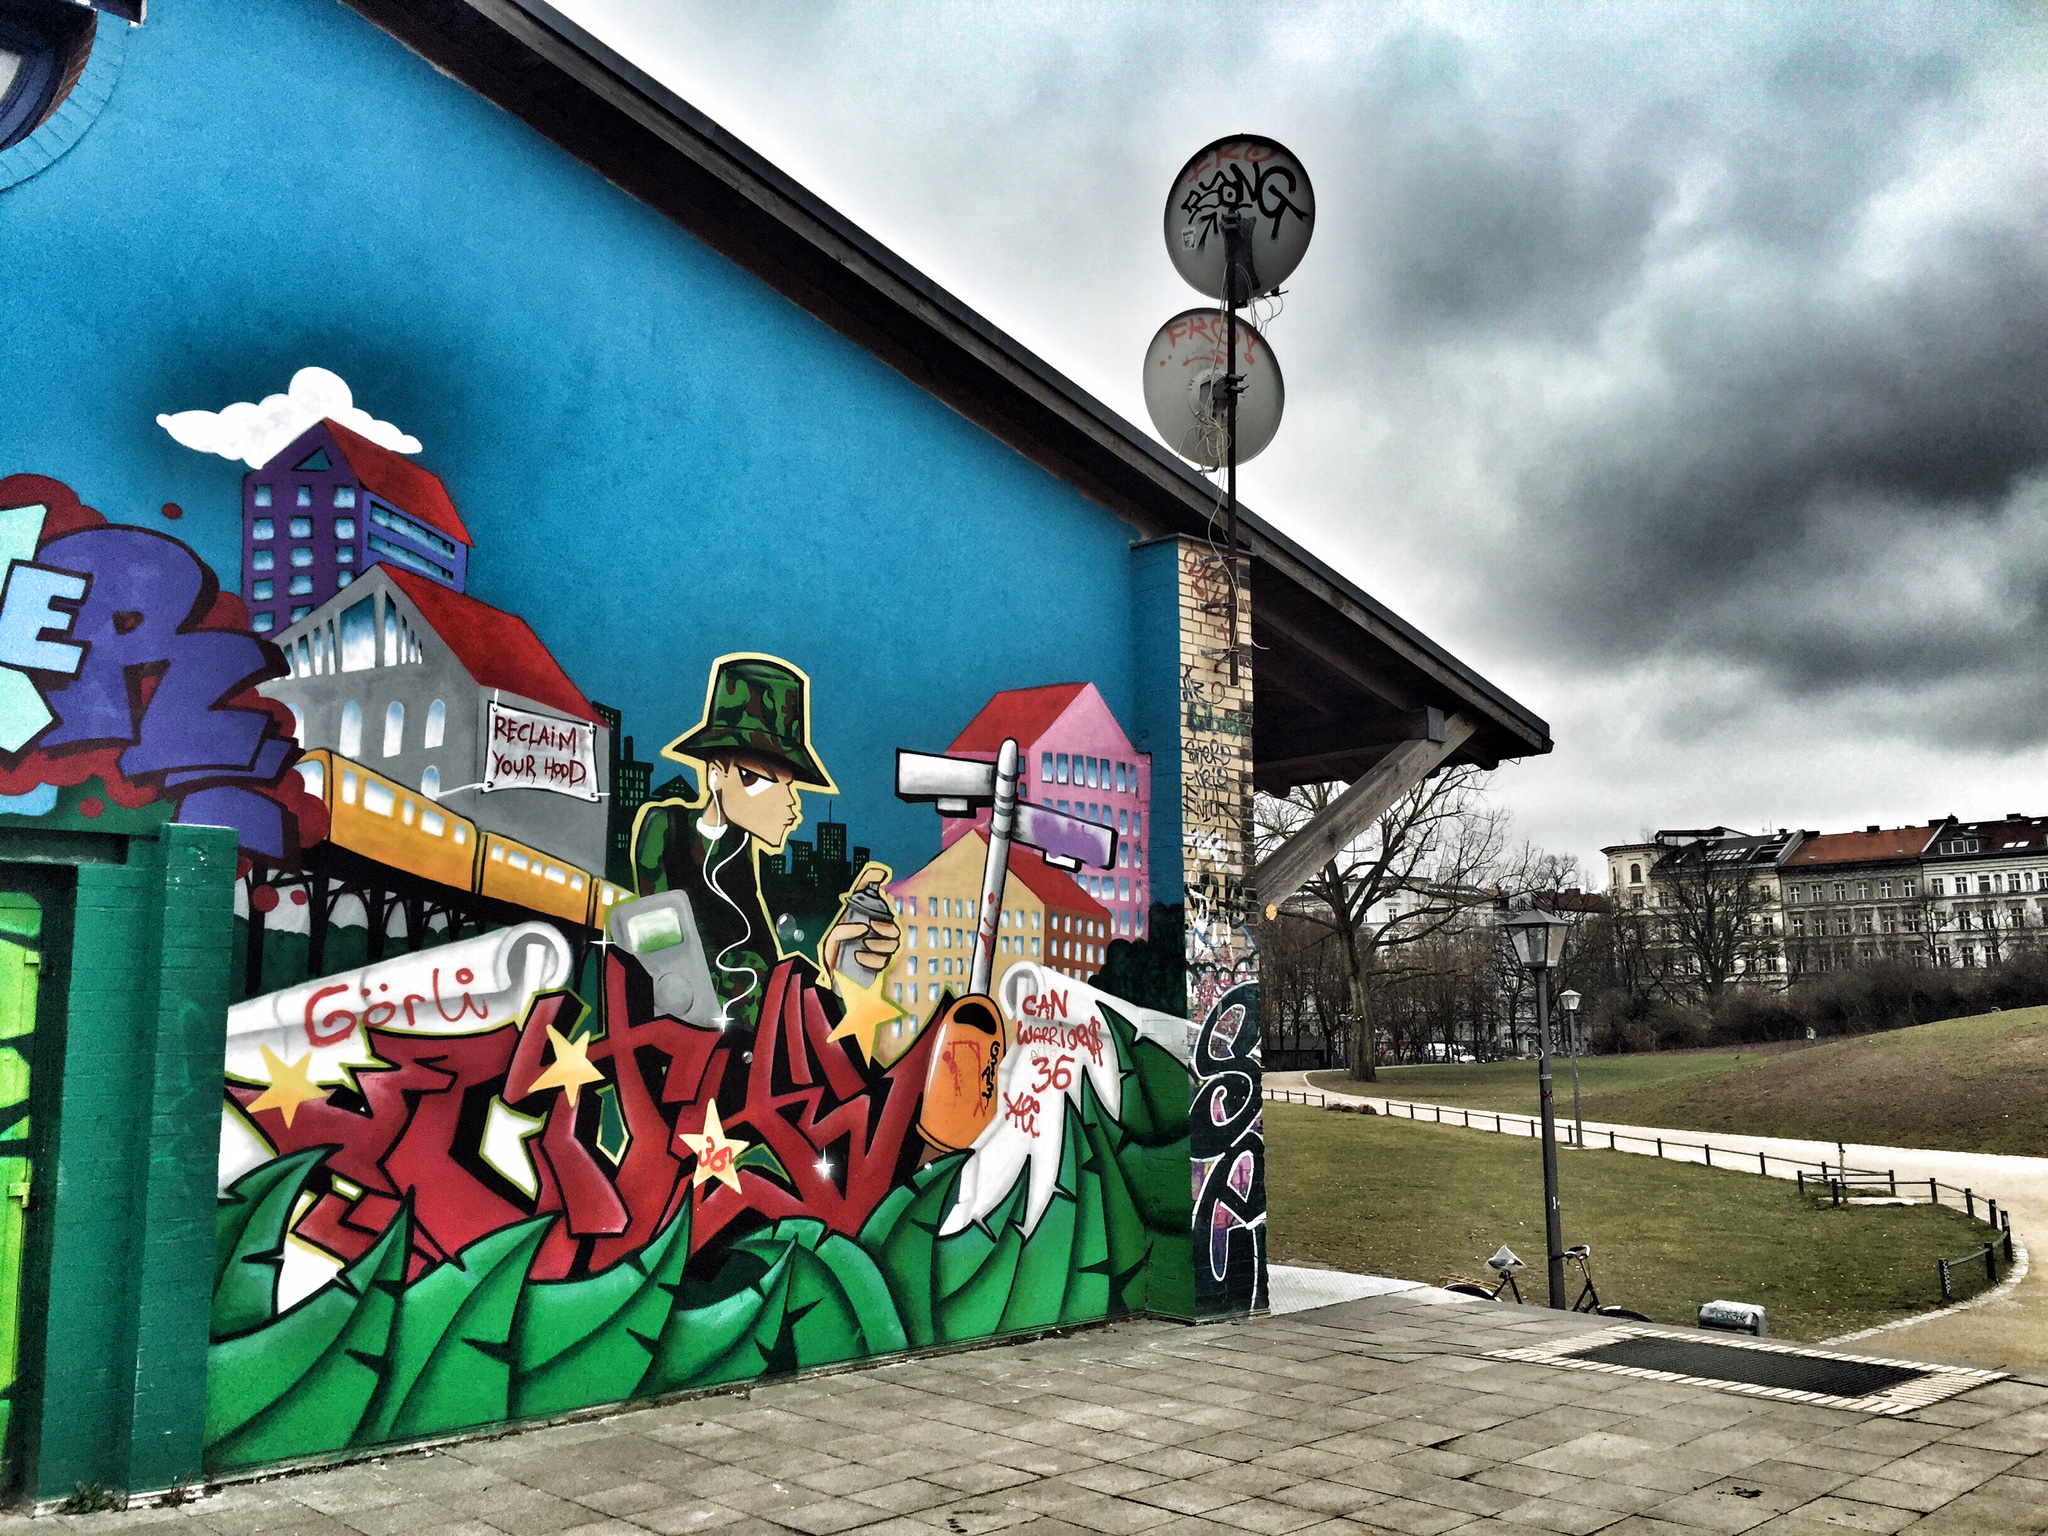 Berlin does graffiti really well